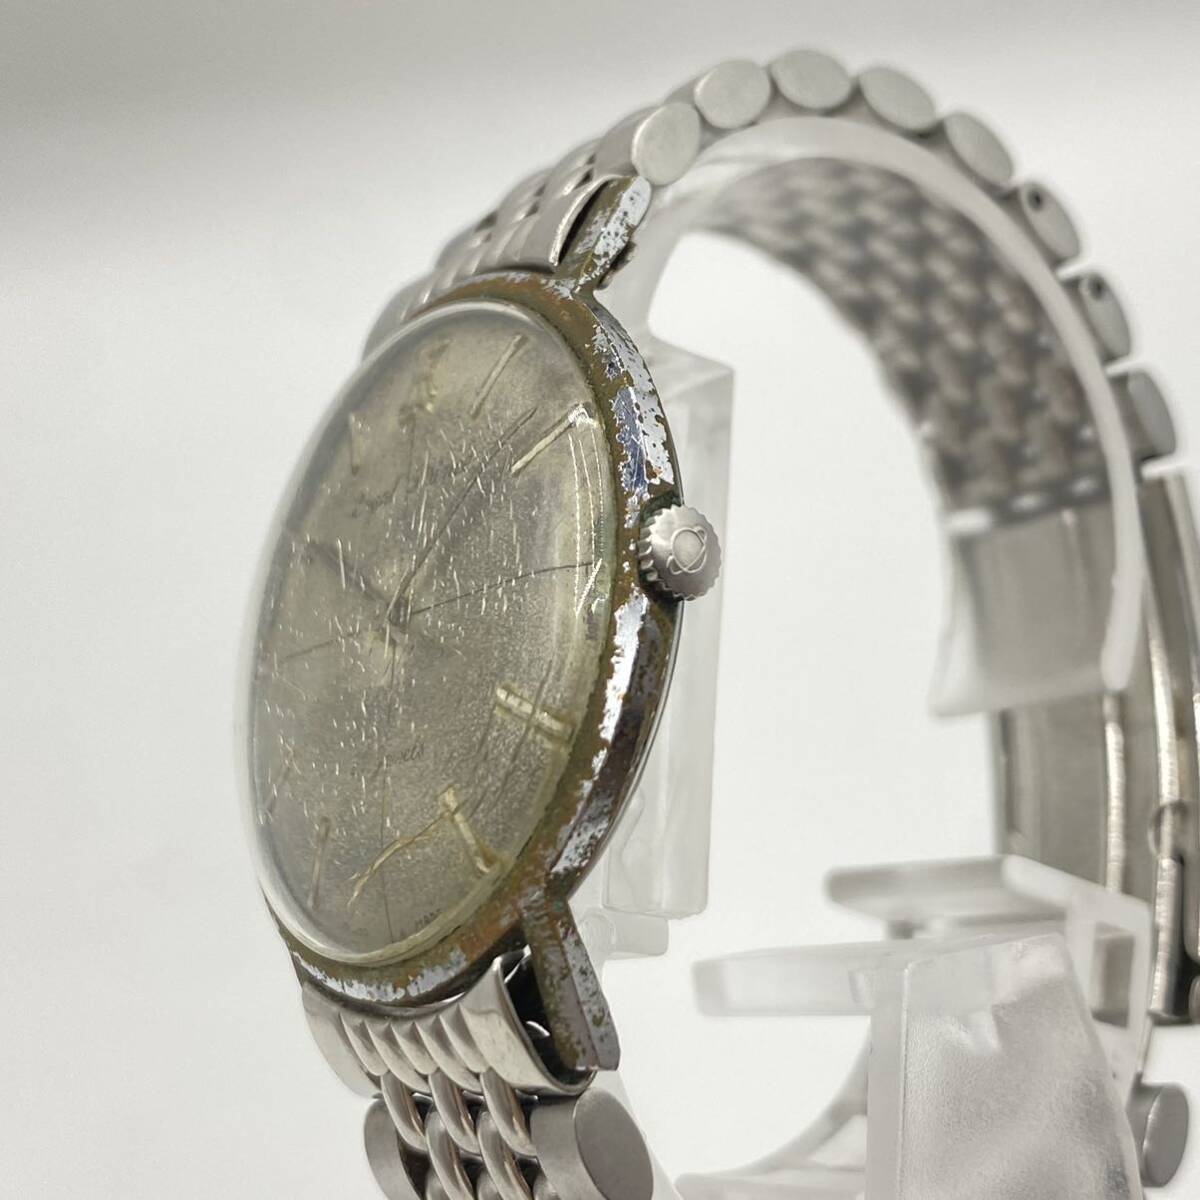 ROYAL Prince Royal Prince 3342 men's hand winding wristwatch Vintage antique operation 